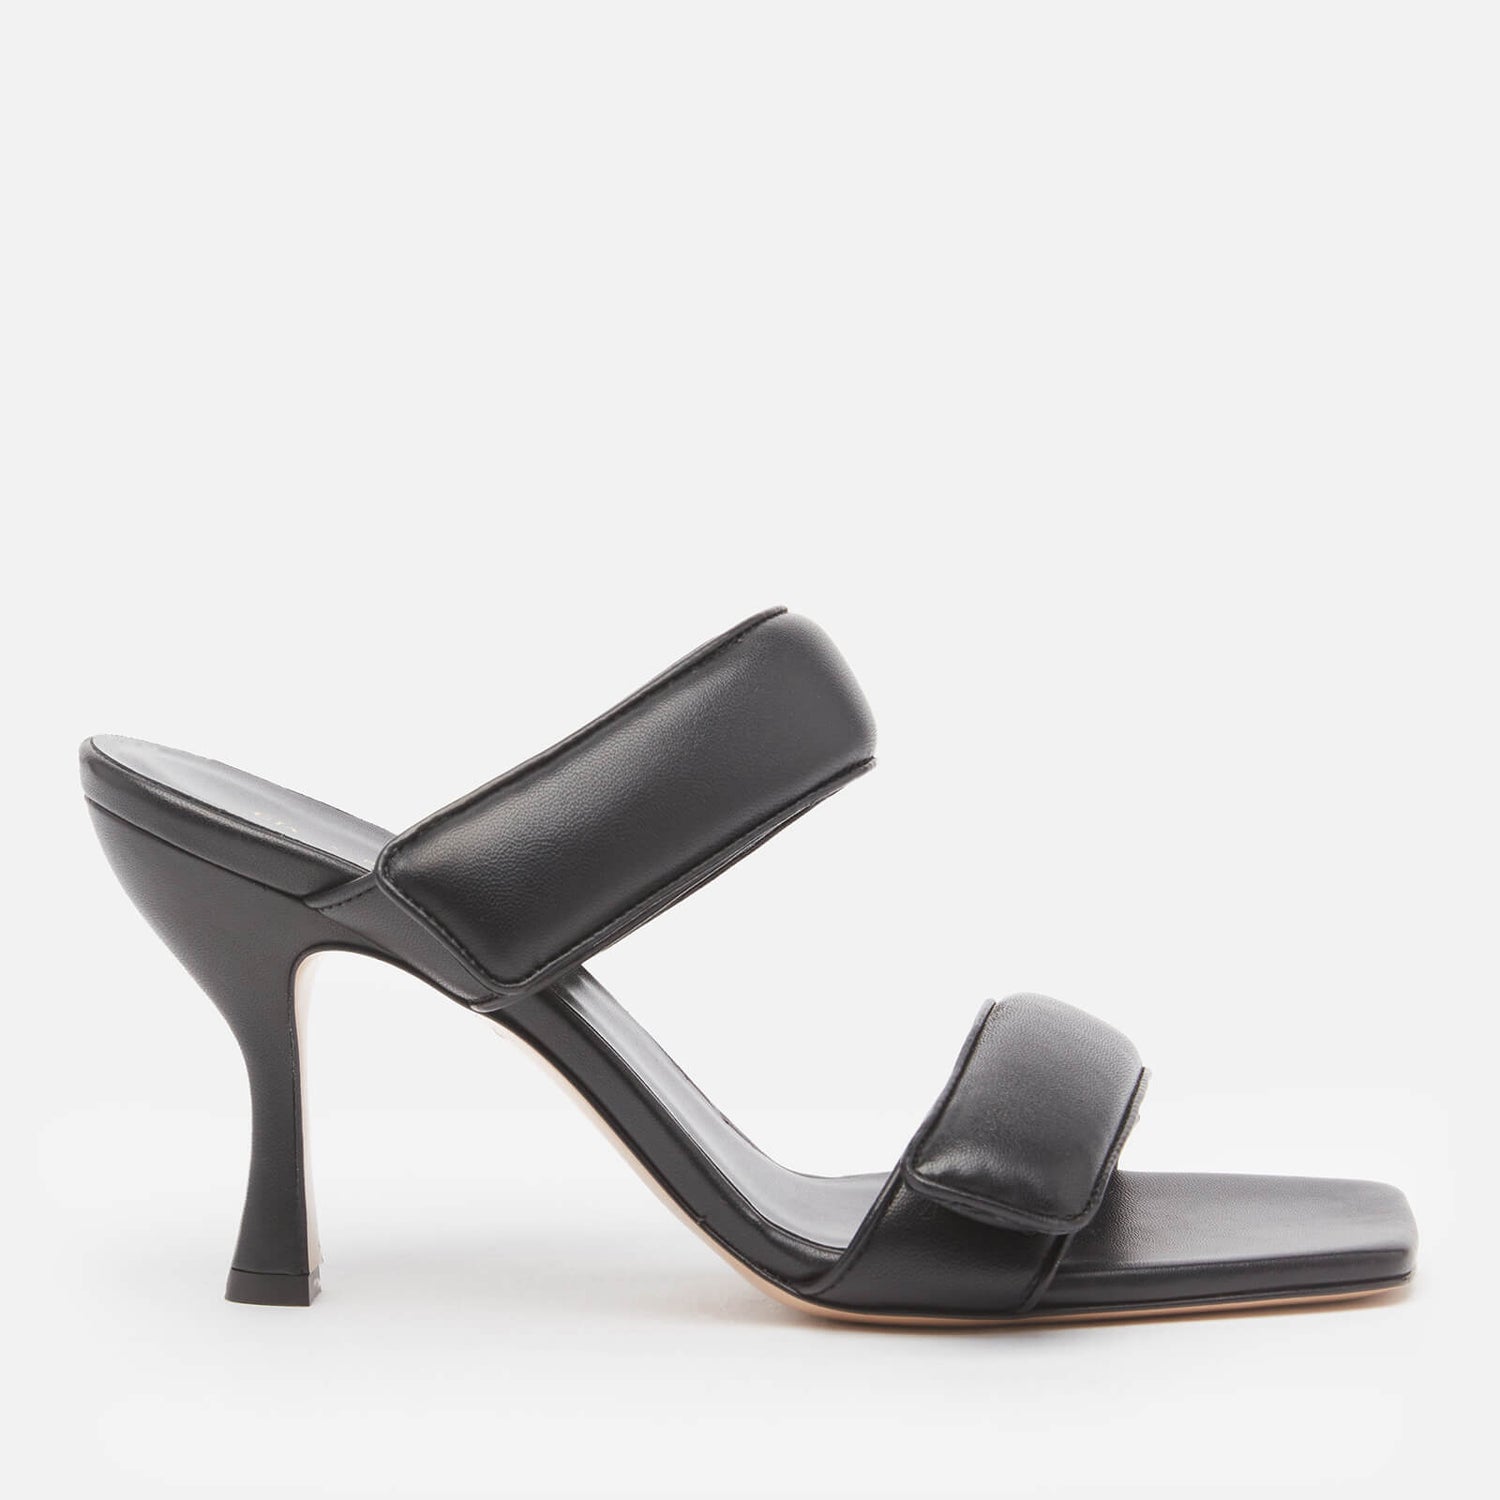 GIA X PERNILLE TEISBAEK Women's Perni 80mm Leather Two Strap Heeled Sandals - Black - UK 3